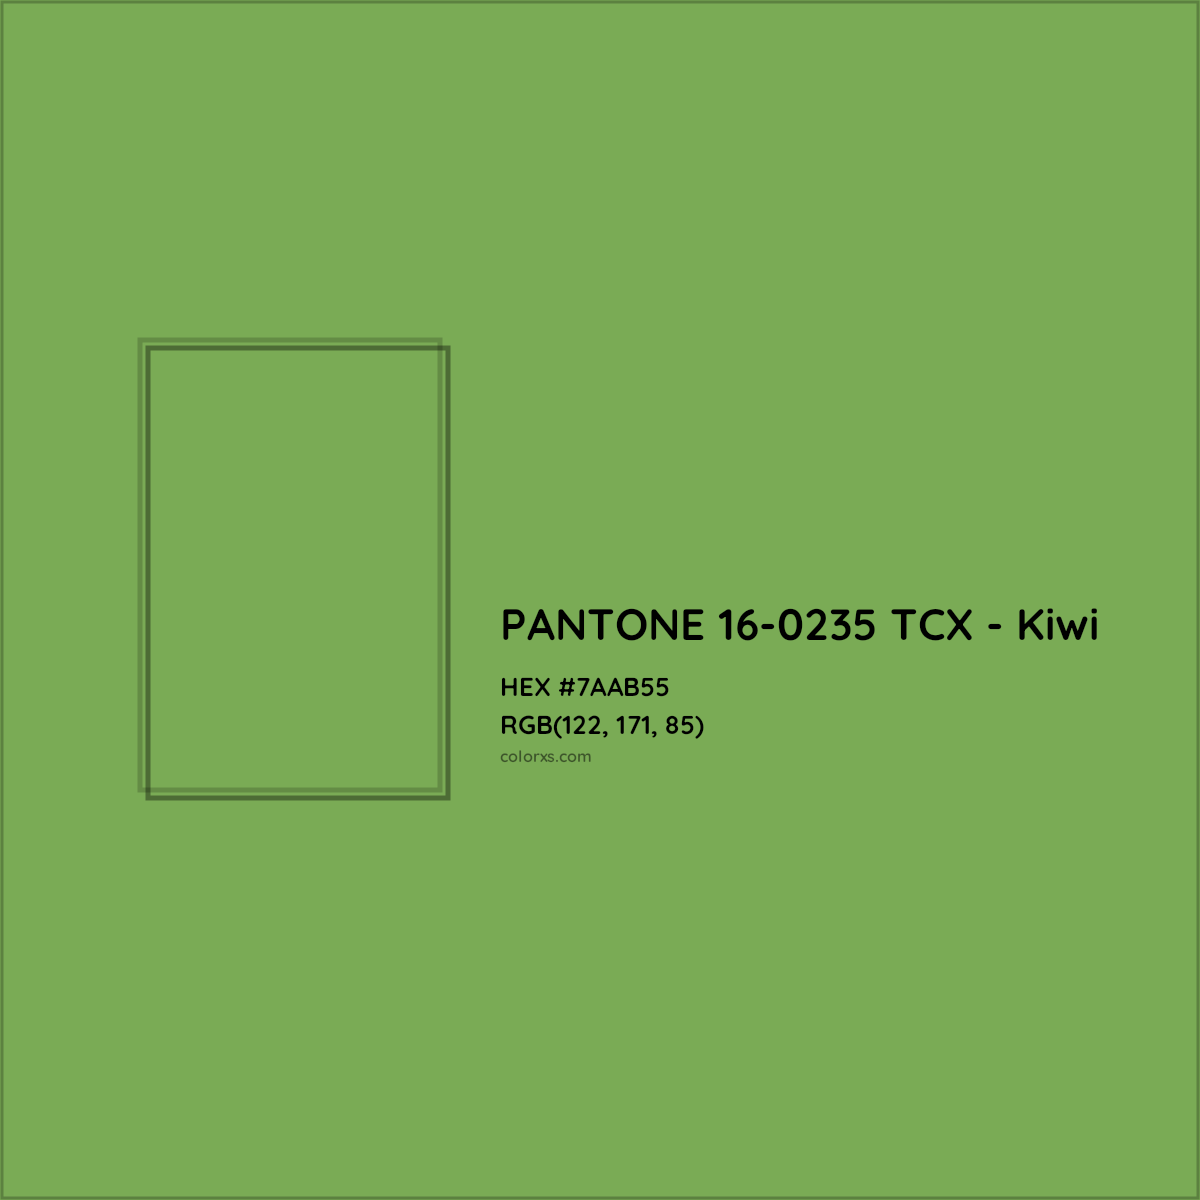 HEX #7AAB55 PANTONE 16-0235 TCX - Kiwi CMS Pantone TCX - Color Code